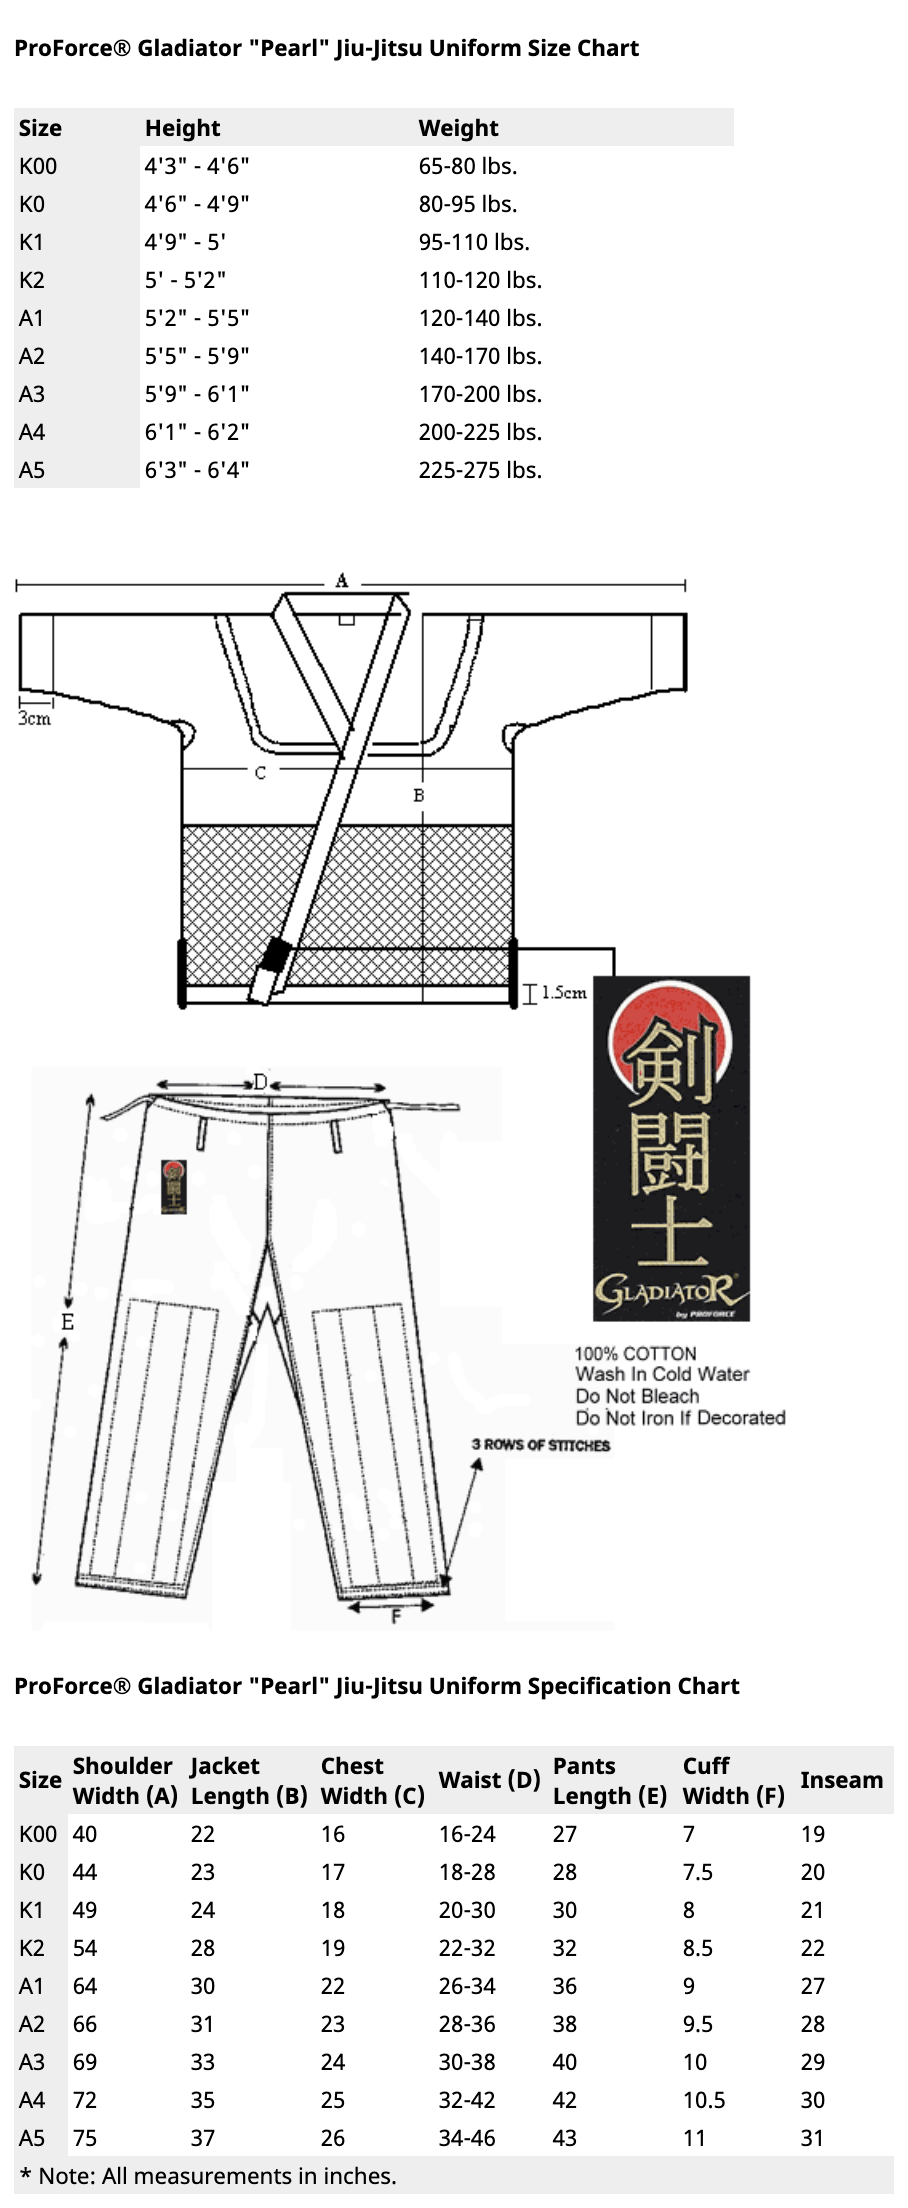 EclipseMartialArtsSupplies sporting goods ProForce Gladiator Pearl Jiu-Jitsu Uniform